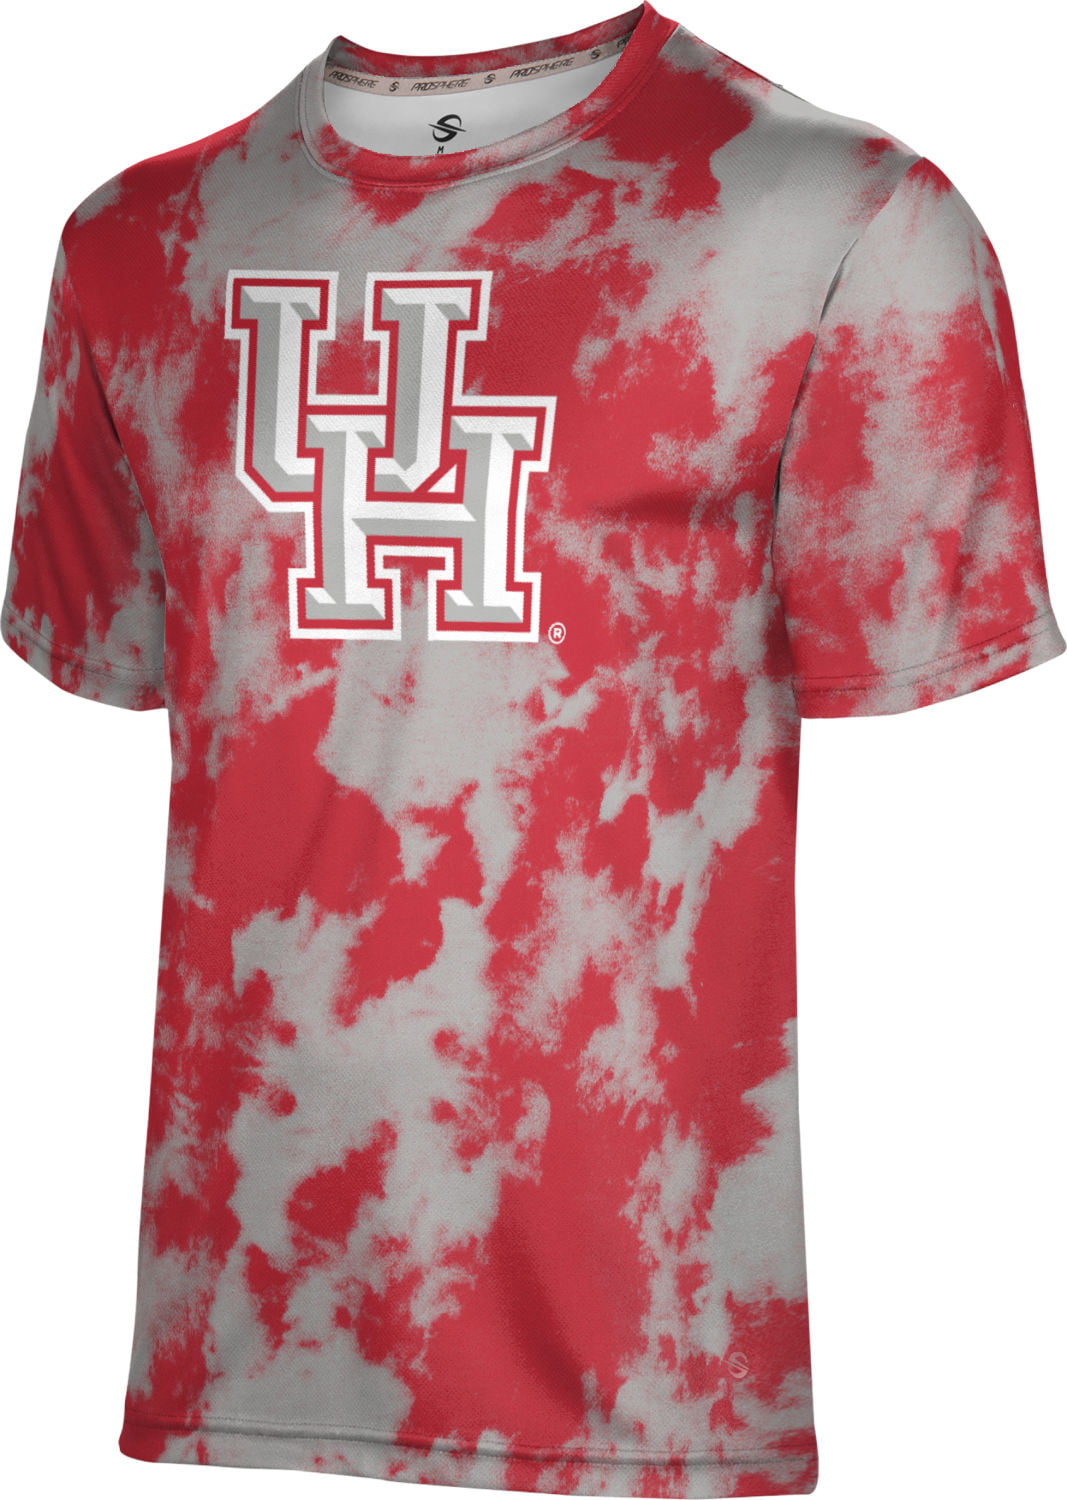 Grunge ProSphere University of Houston Boys Performance T-Shirt